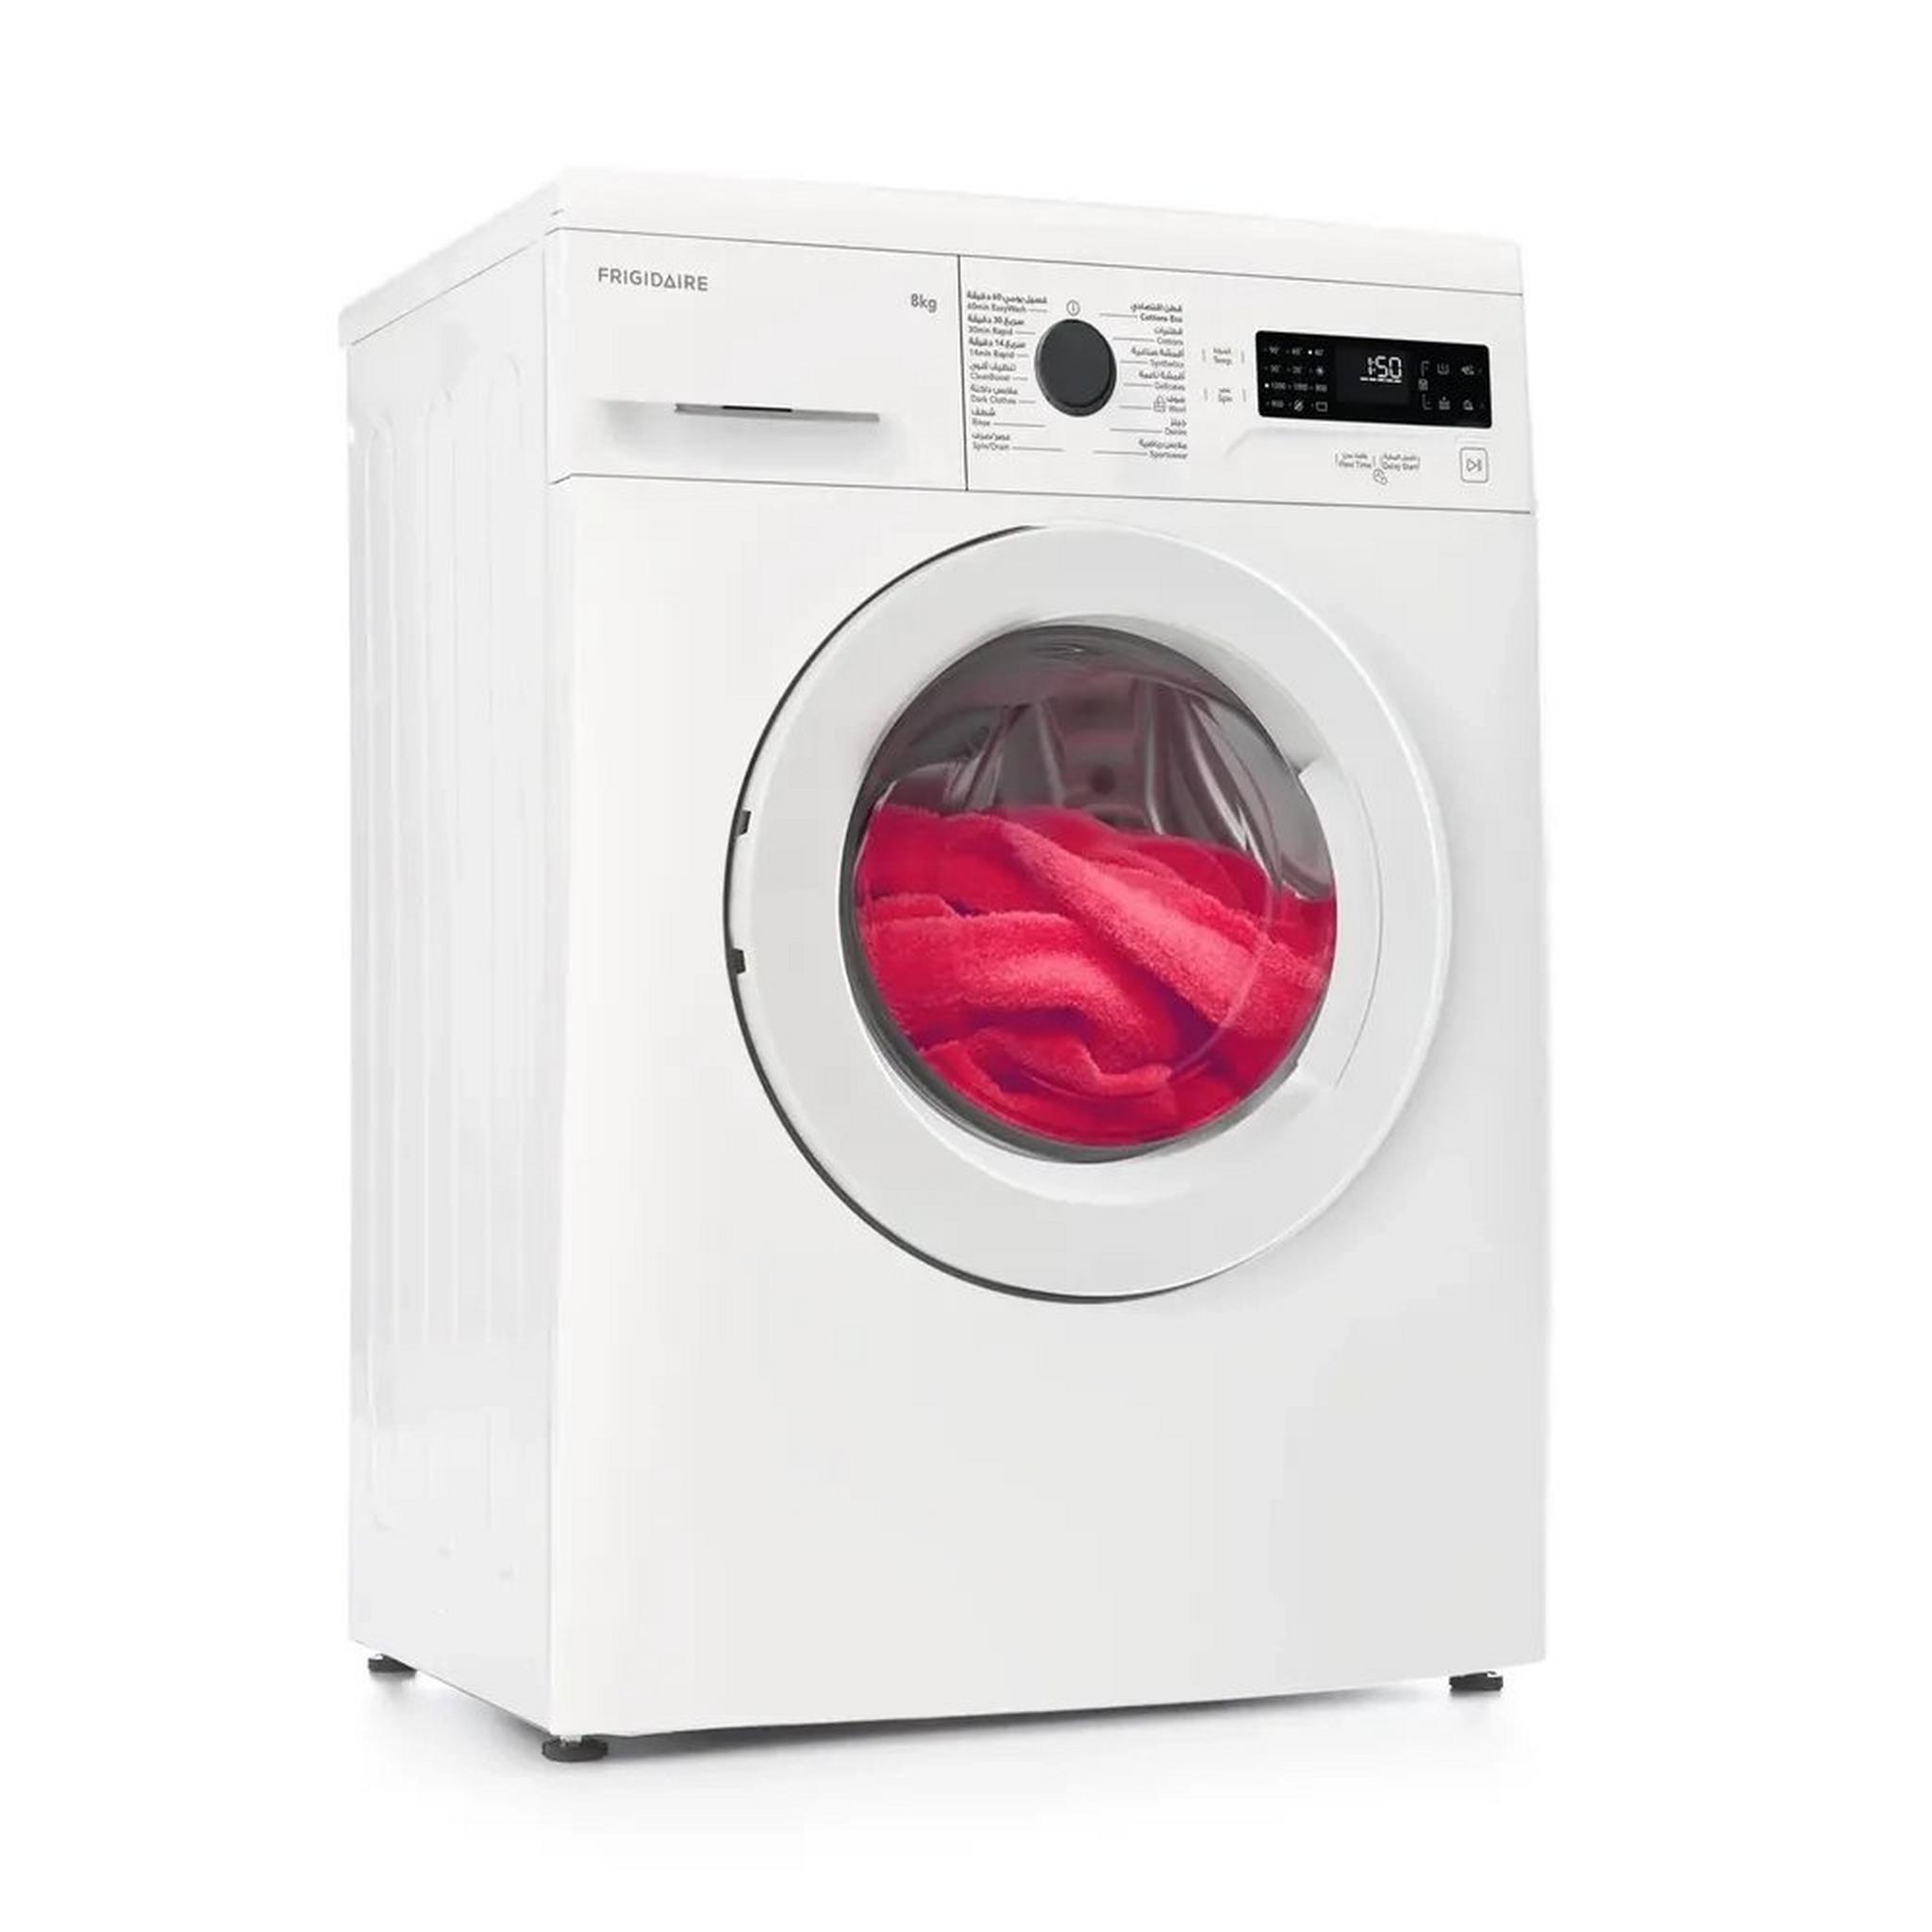 FRIGIDAIRE 8 KG Front Load Washing Machine, 1200 RPM, FWF824A5W - WHITE